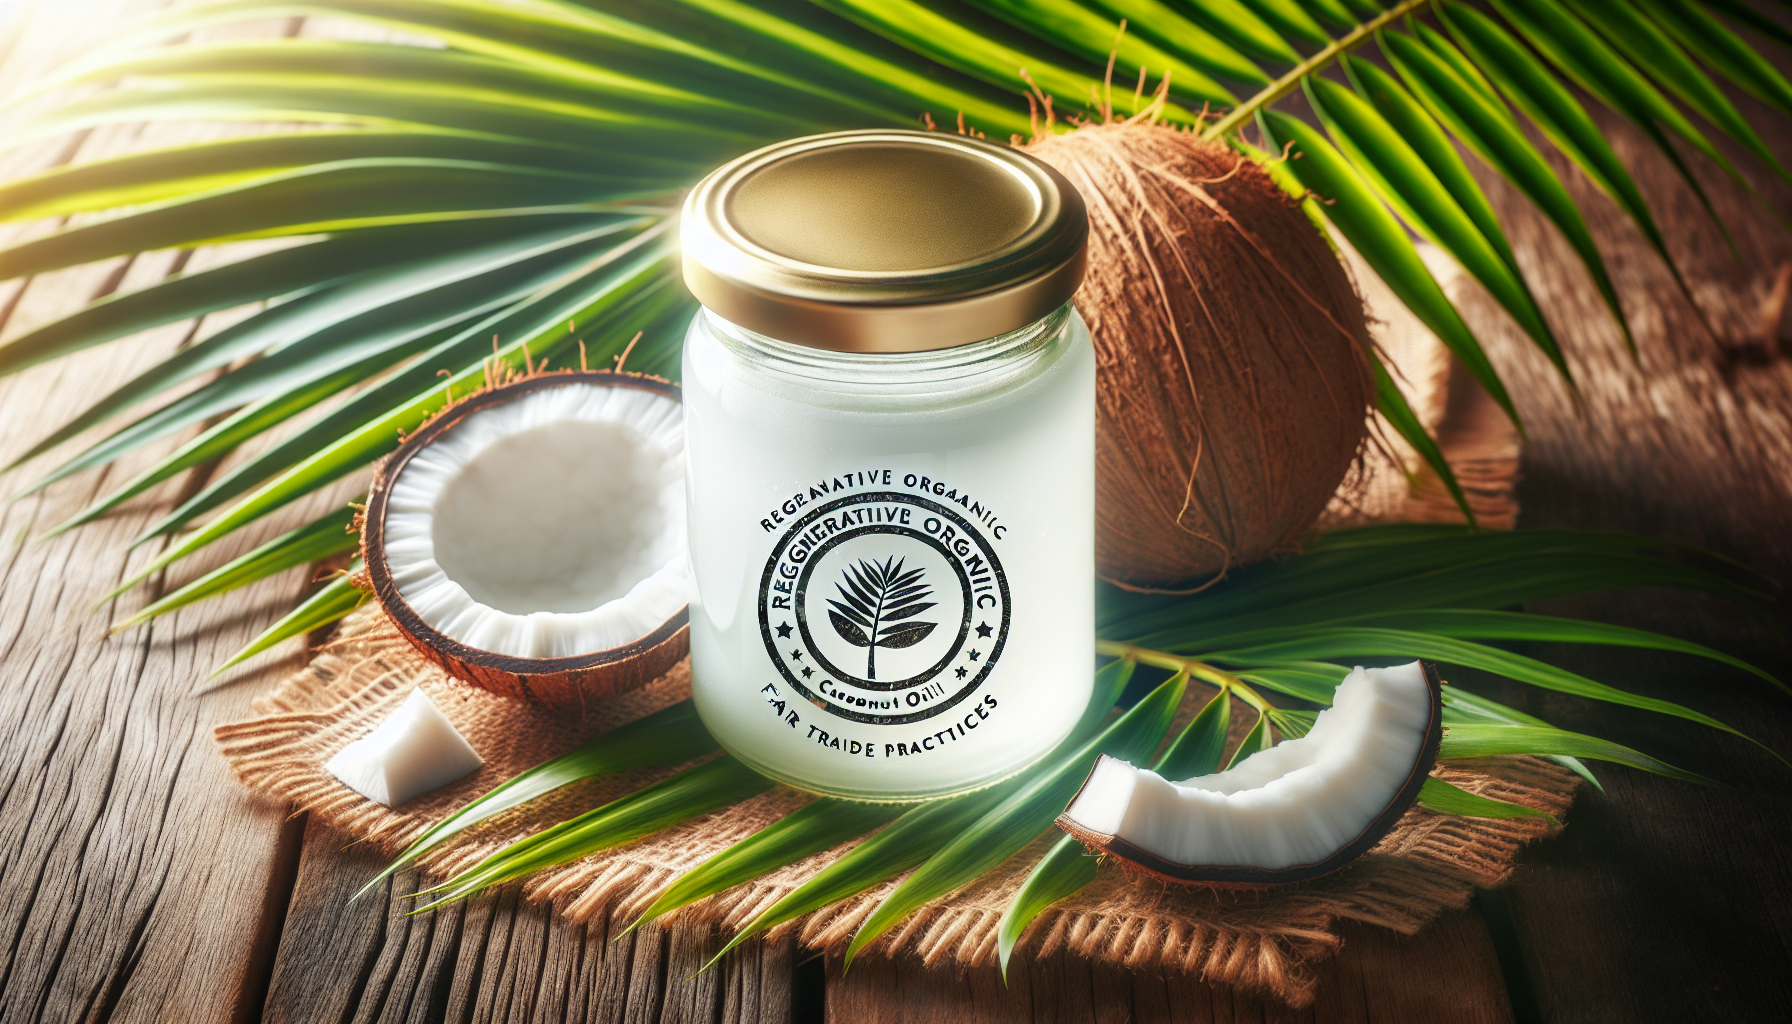 A jar of Dr. Bronner's Organic Whole Kernel Virgin Coconut Oil